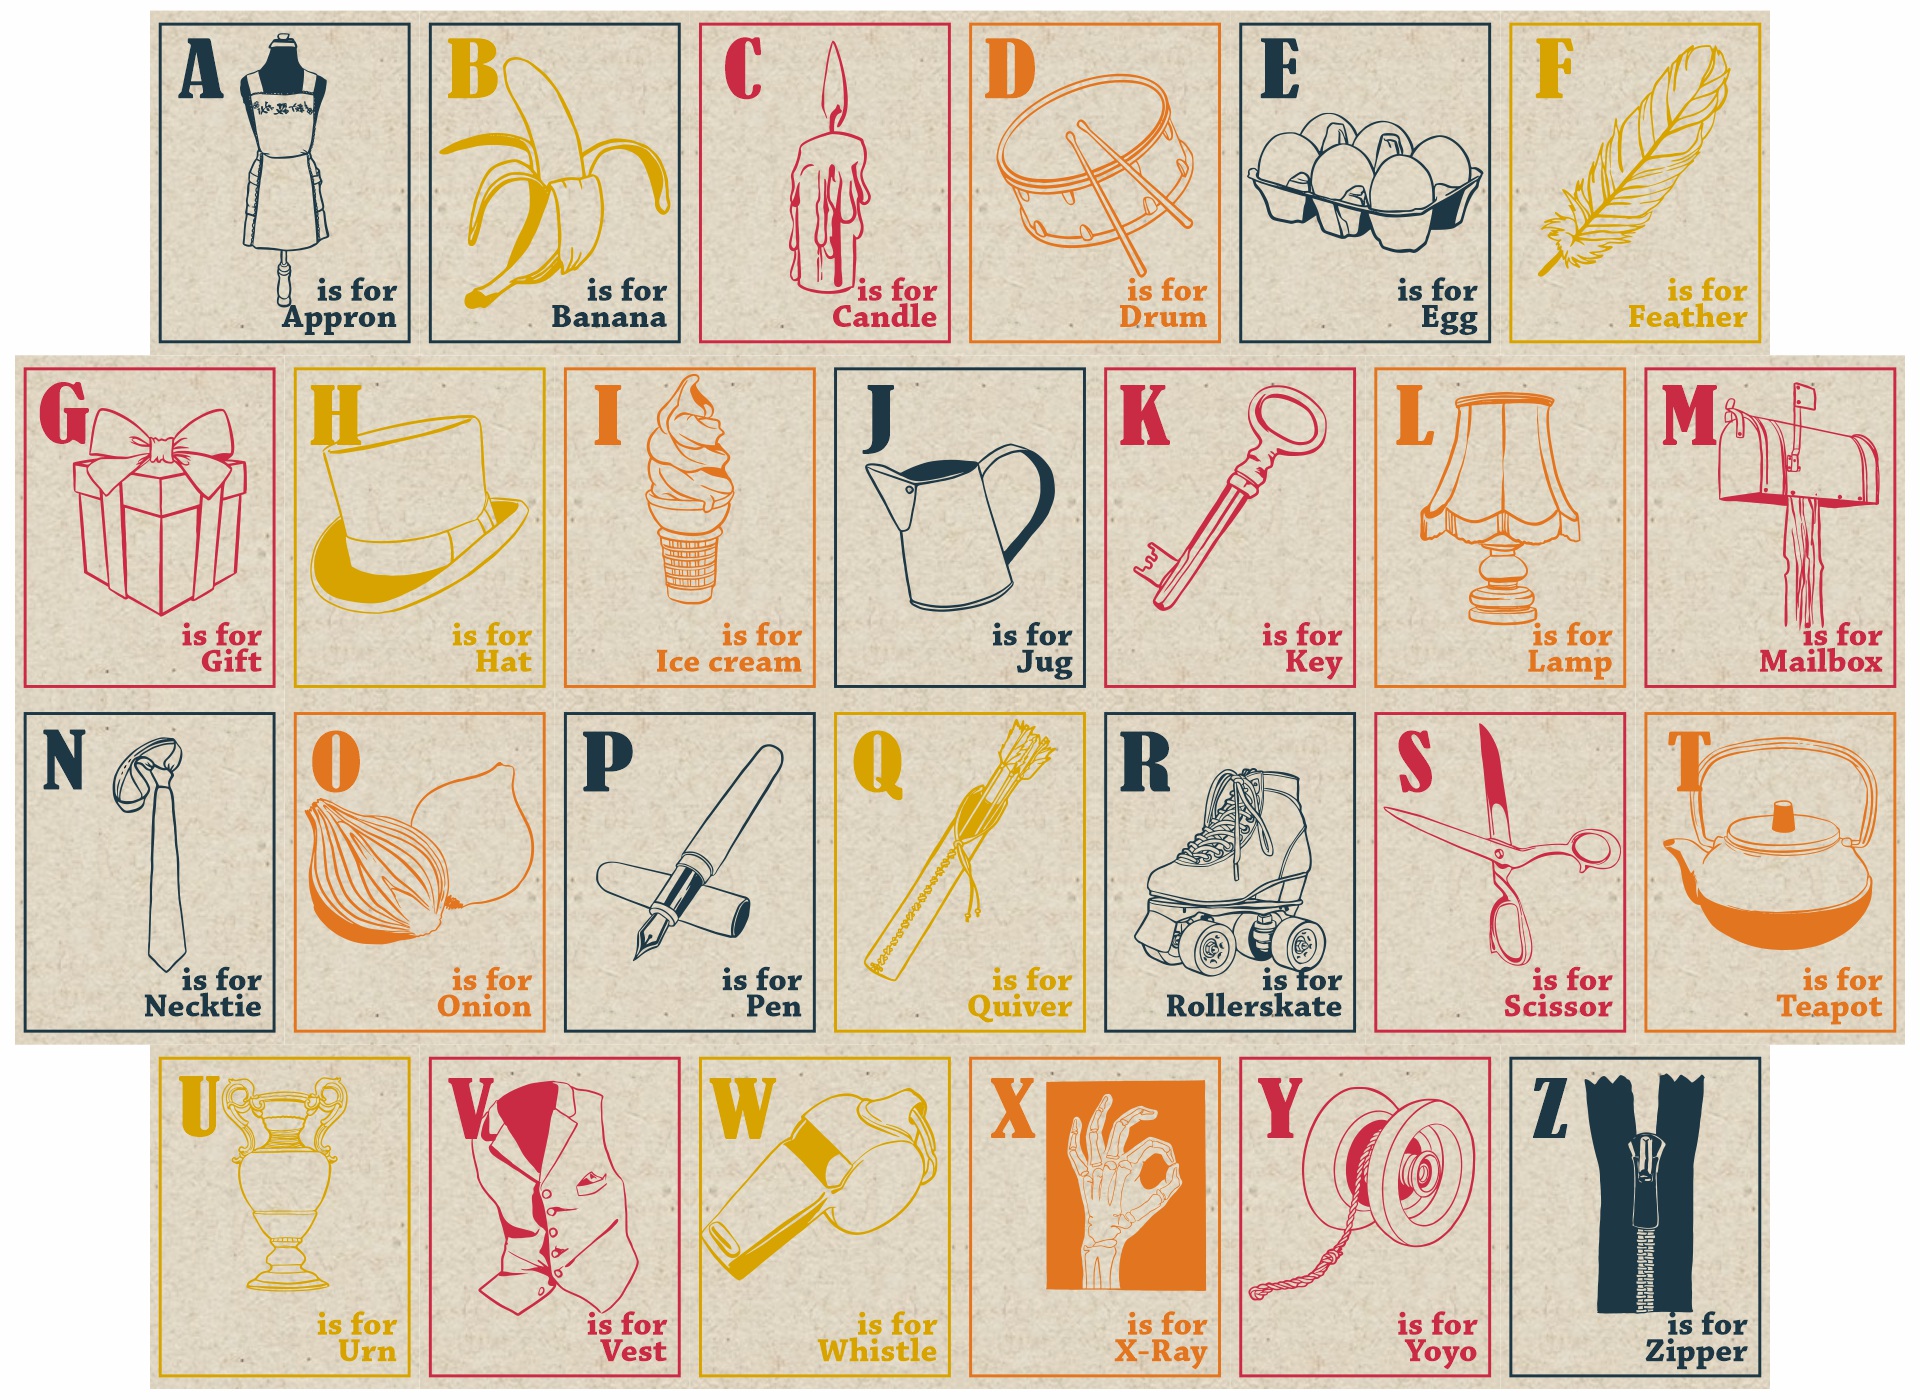 Vintage Alphabet Cards